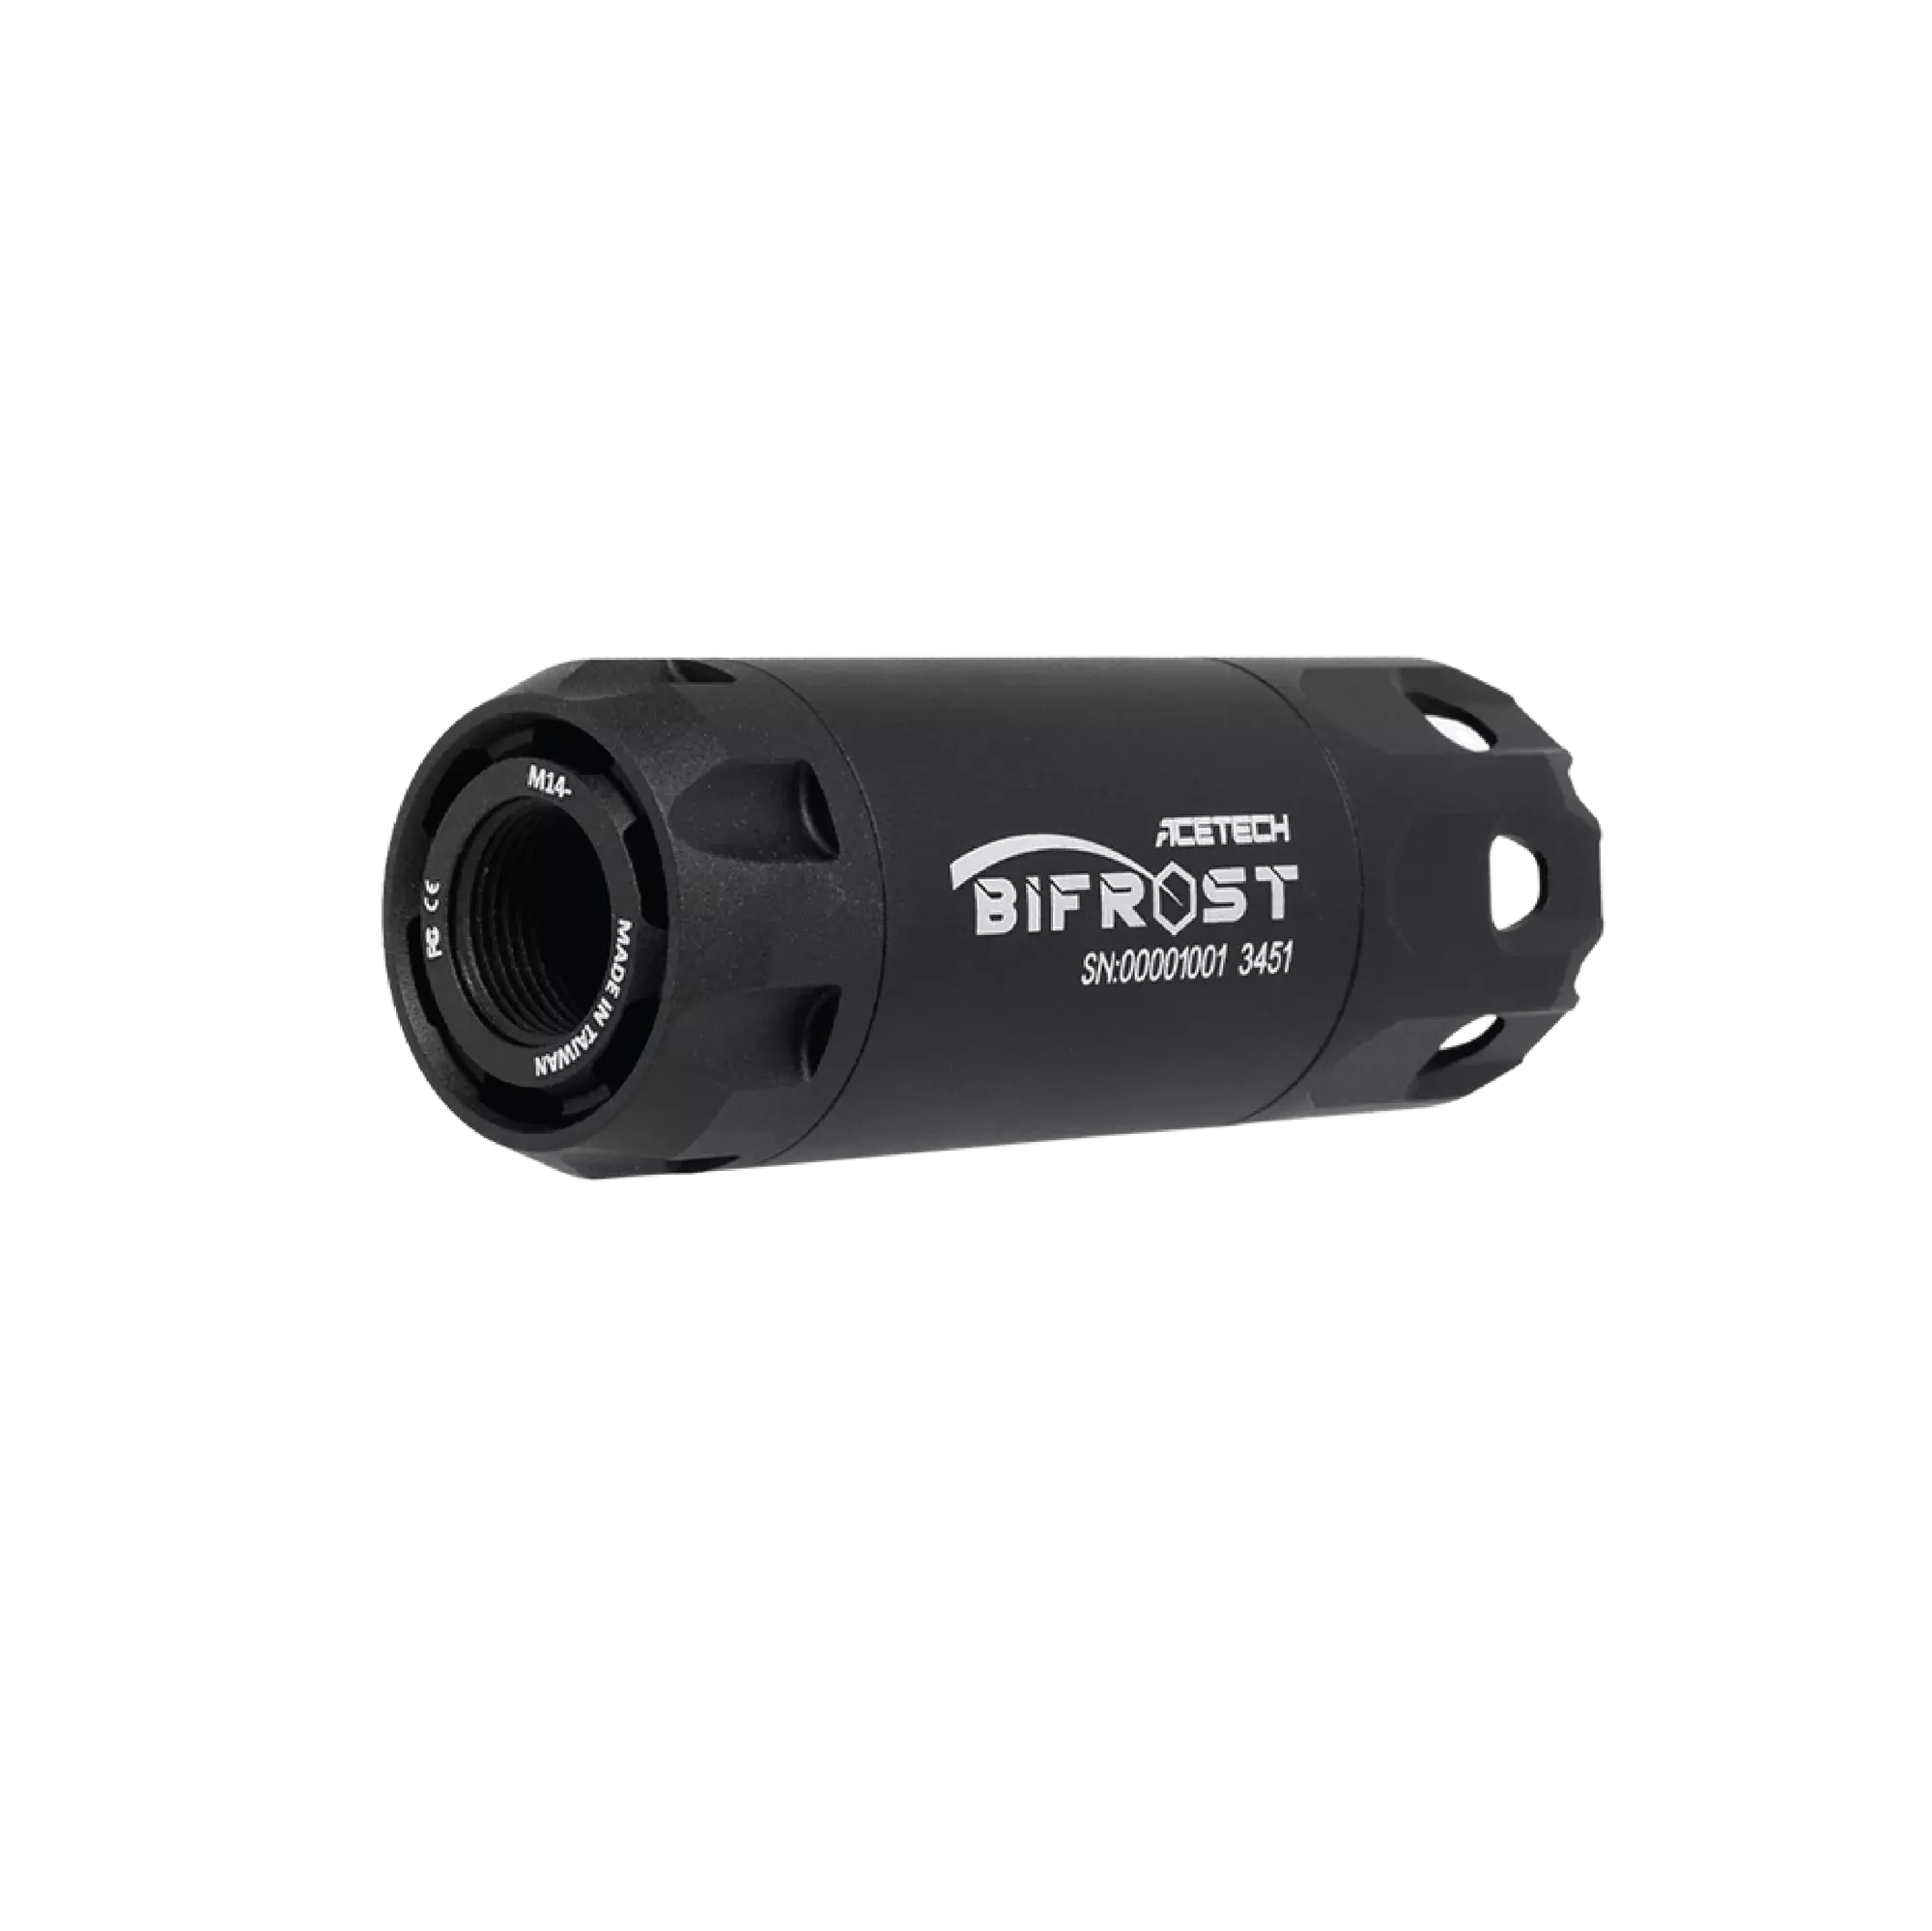 AceTech Bifrost Tracer Unit - suuliekki / valojuovalaite